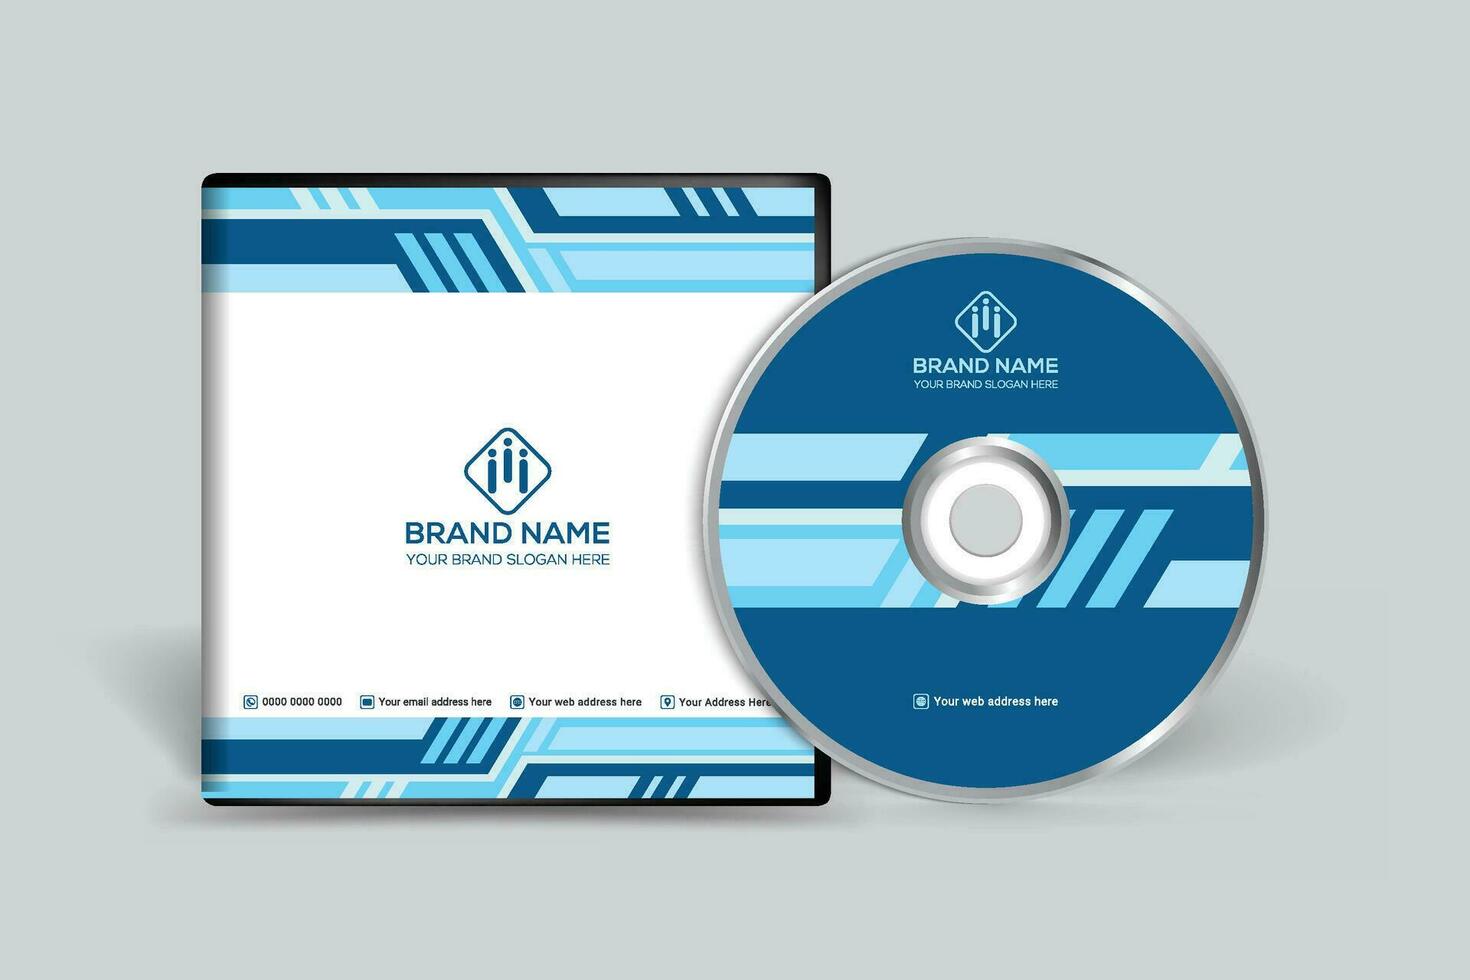 Company CD cover vector design blue color